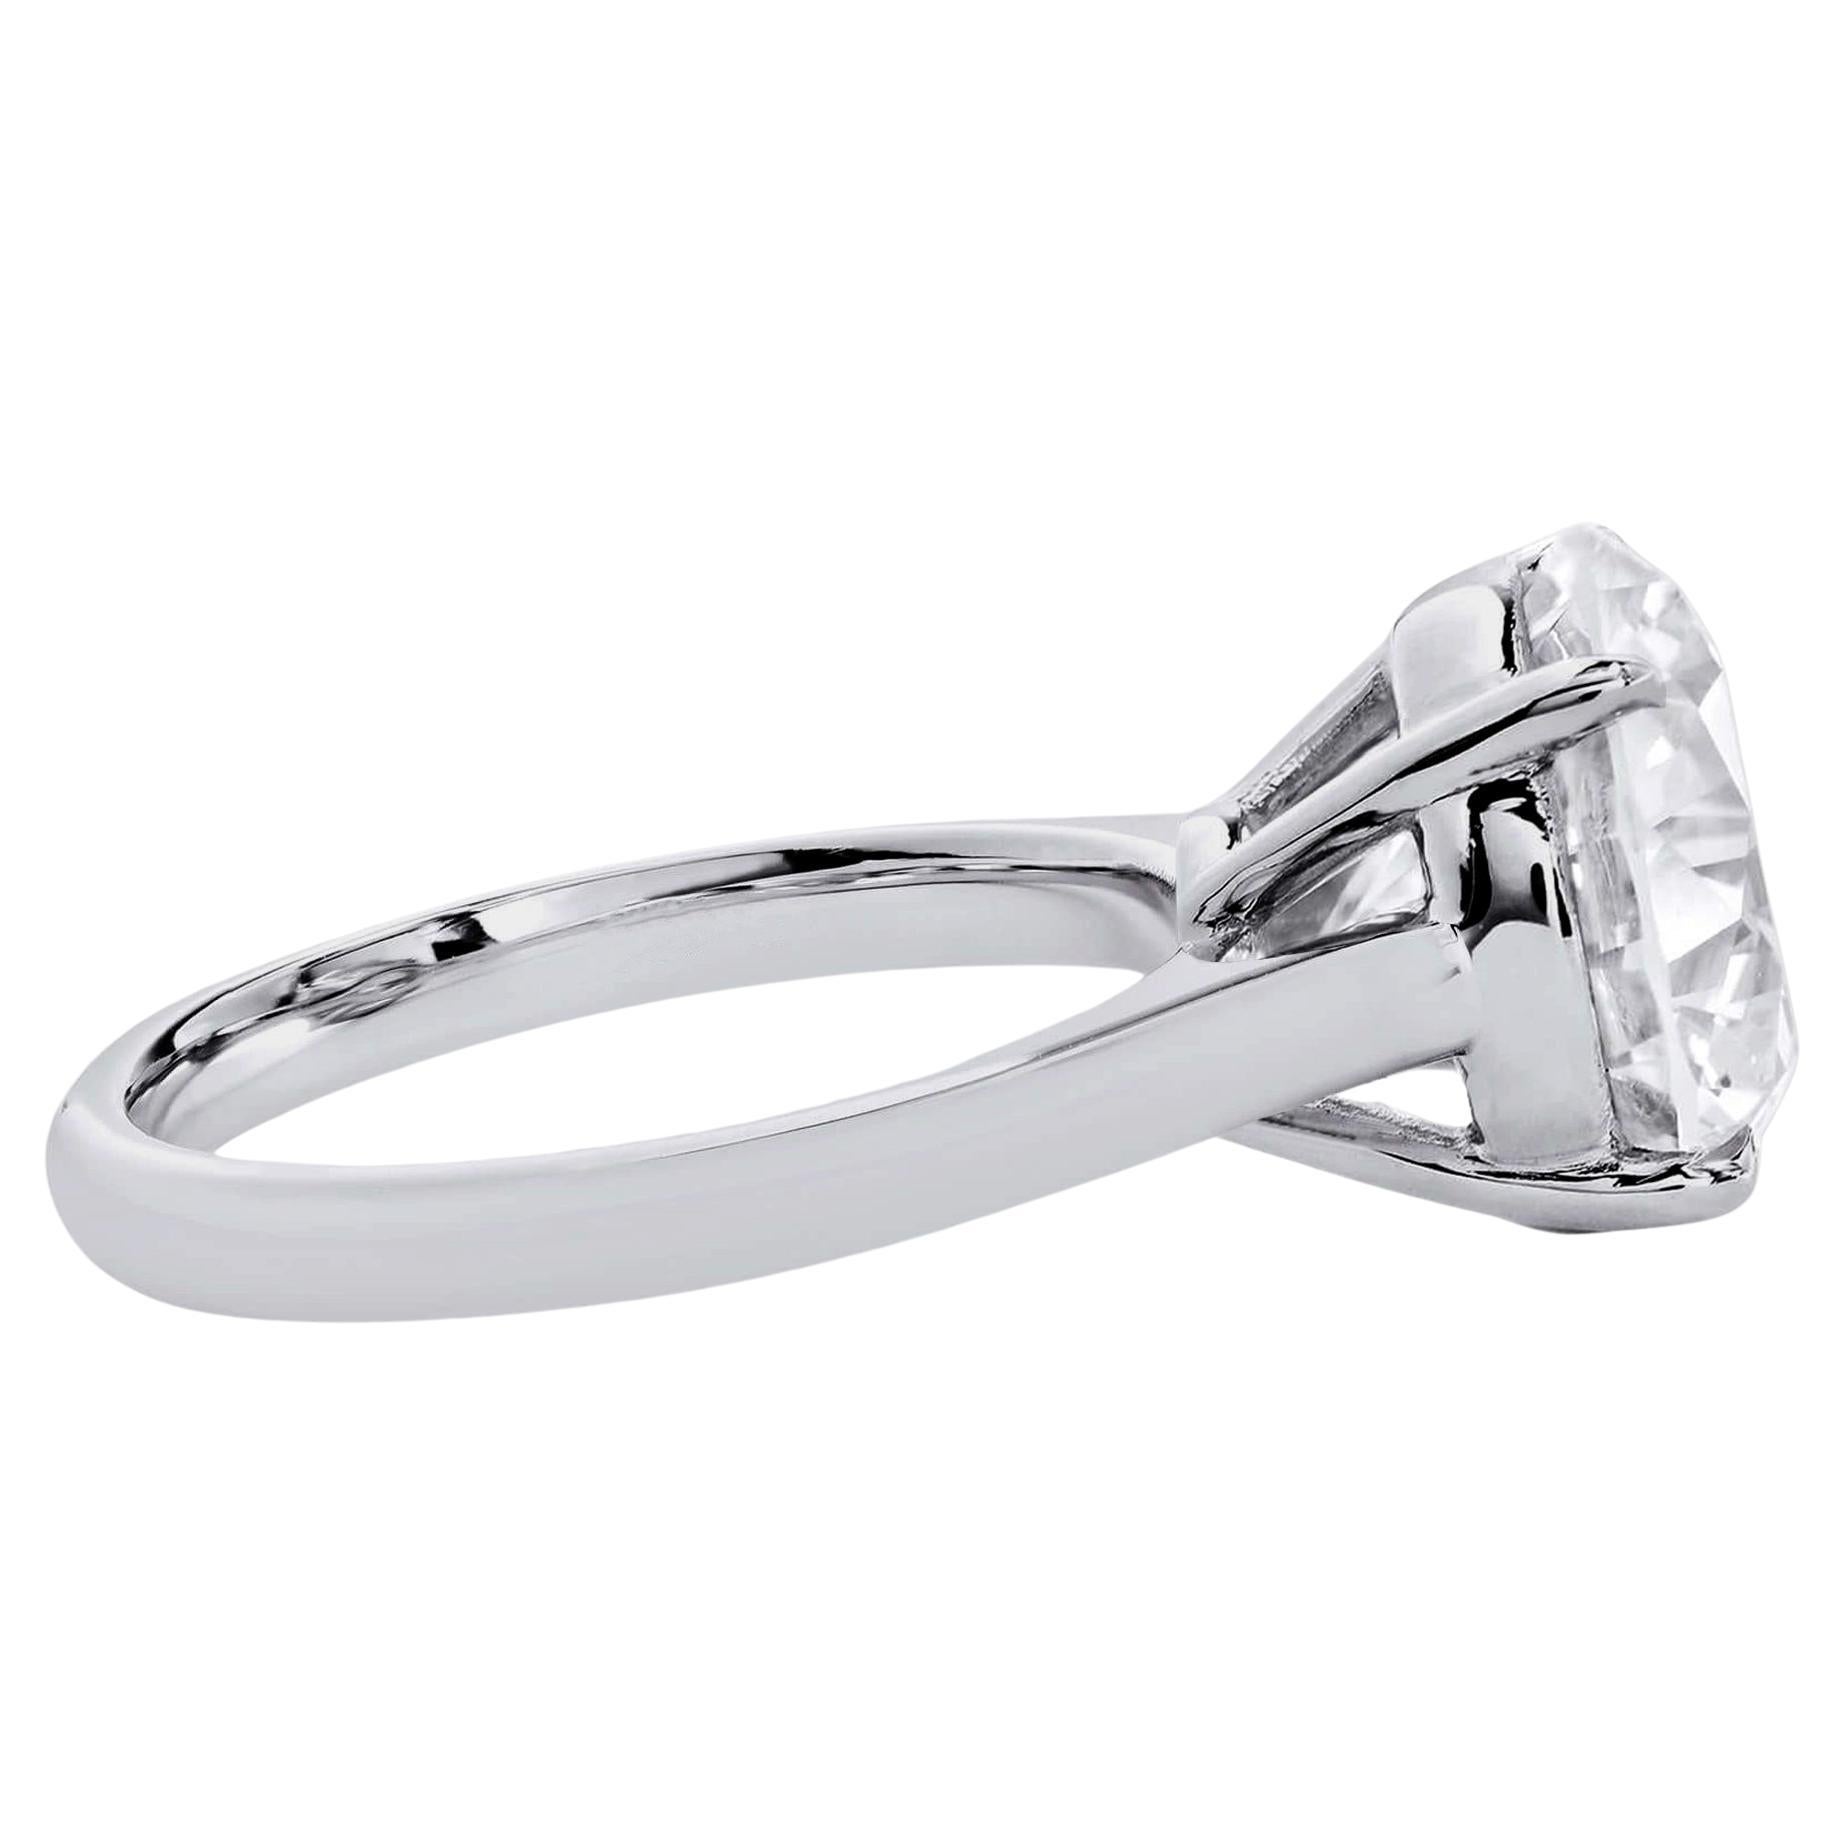 5 carat solitaire diamond ring price